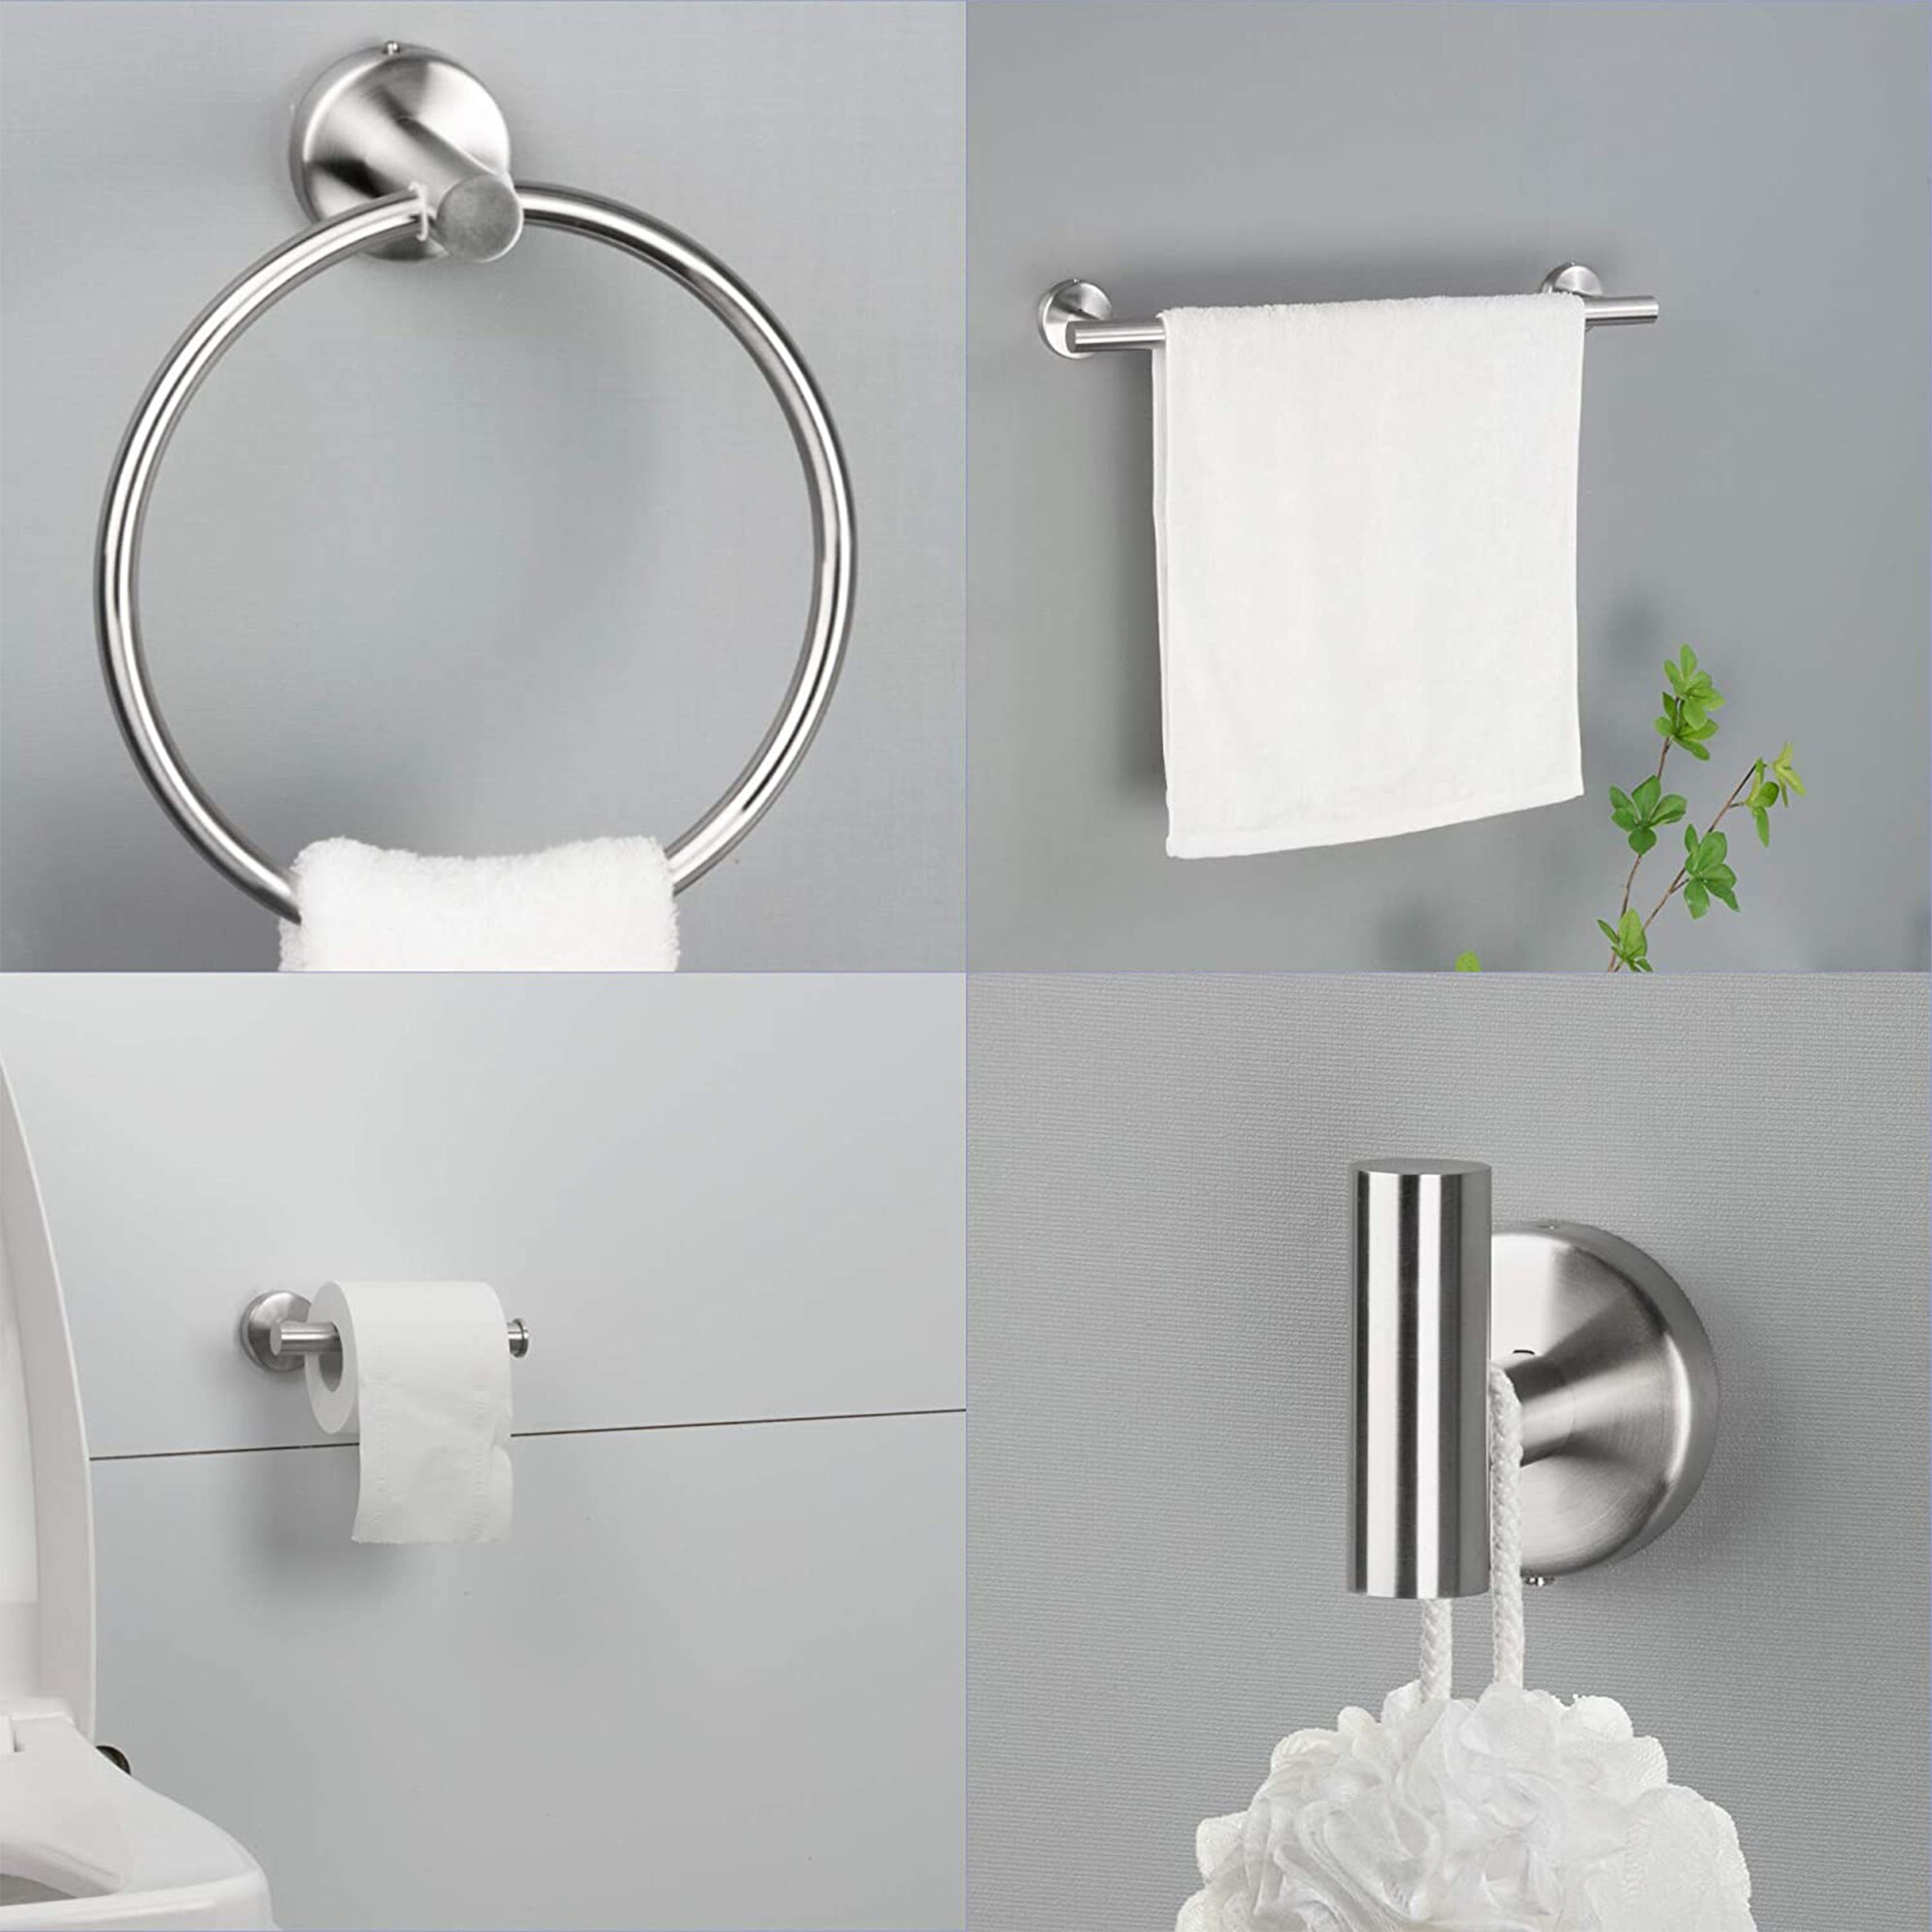 Brushed Nickel Stainless Steel Towel Ring Hand Towel Holder for Bathroom  Wall Stainless Steel Bathroom Towel Ring Hardware Set - AliExpress